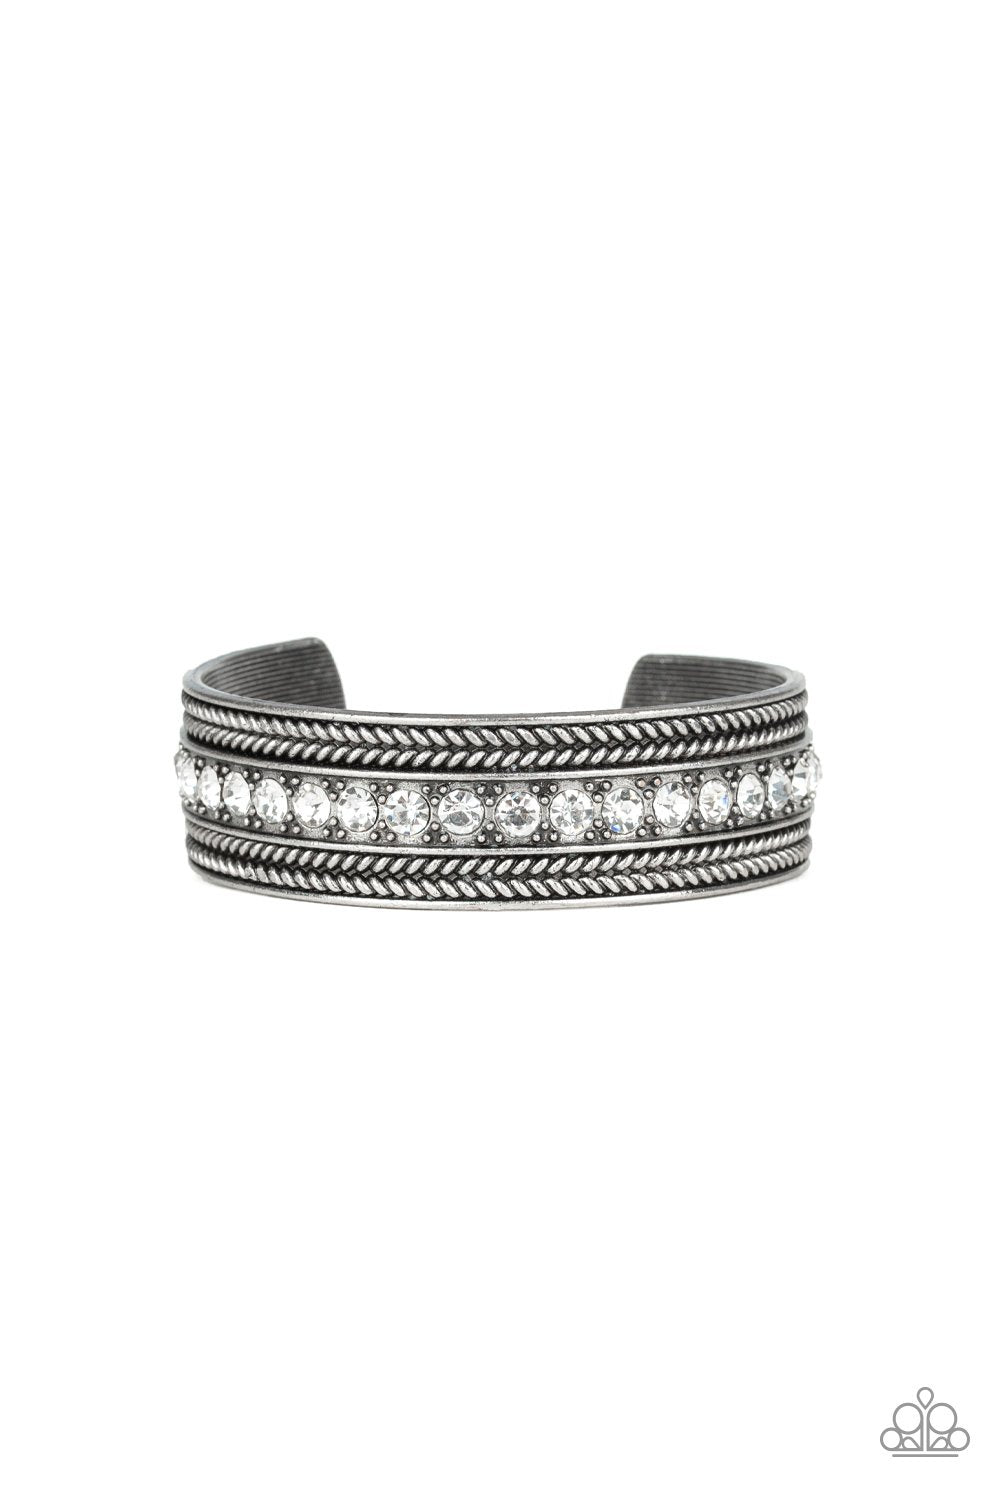 Empress Etiquette White and Silver Cuff Bracelet - Paparazzi Accessories-CarasShop.com - $5 Jewelry by Cara Jewels